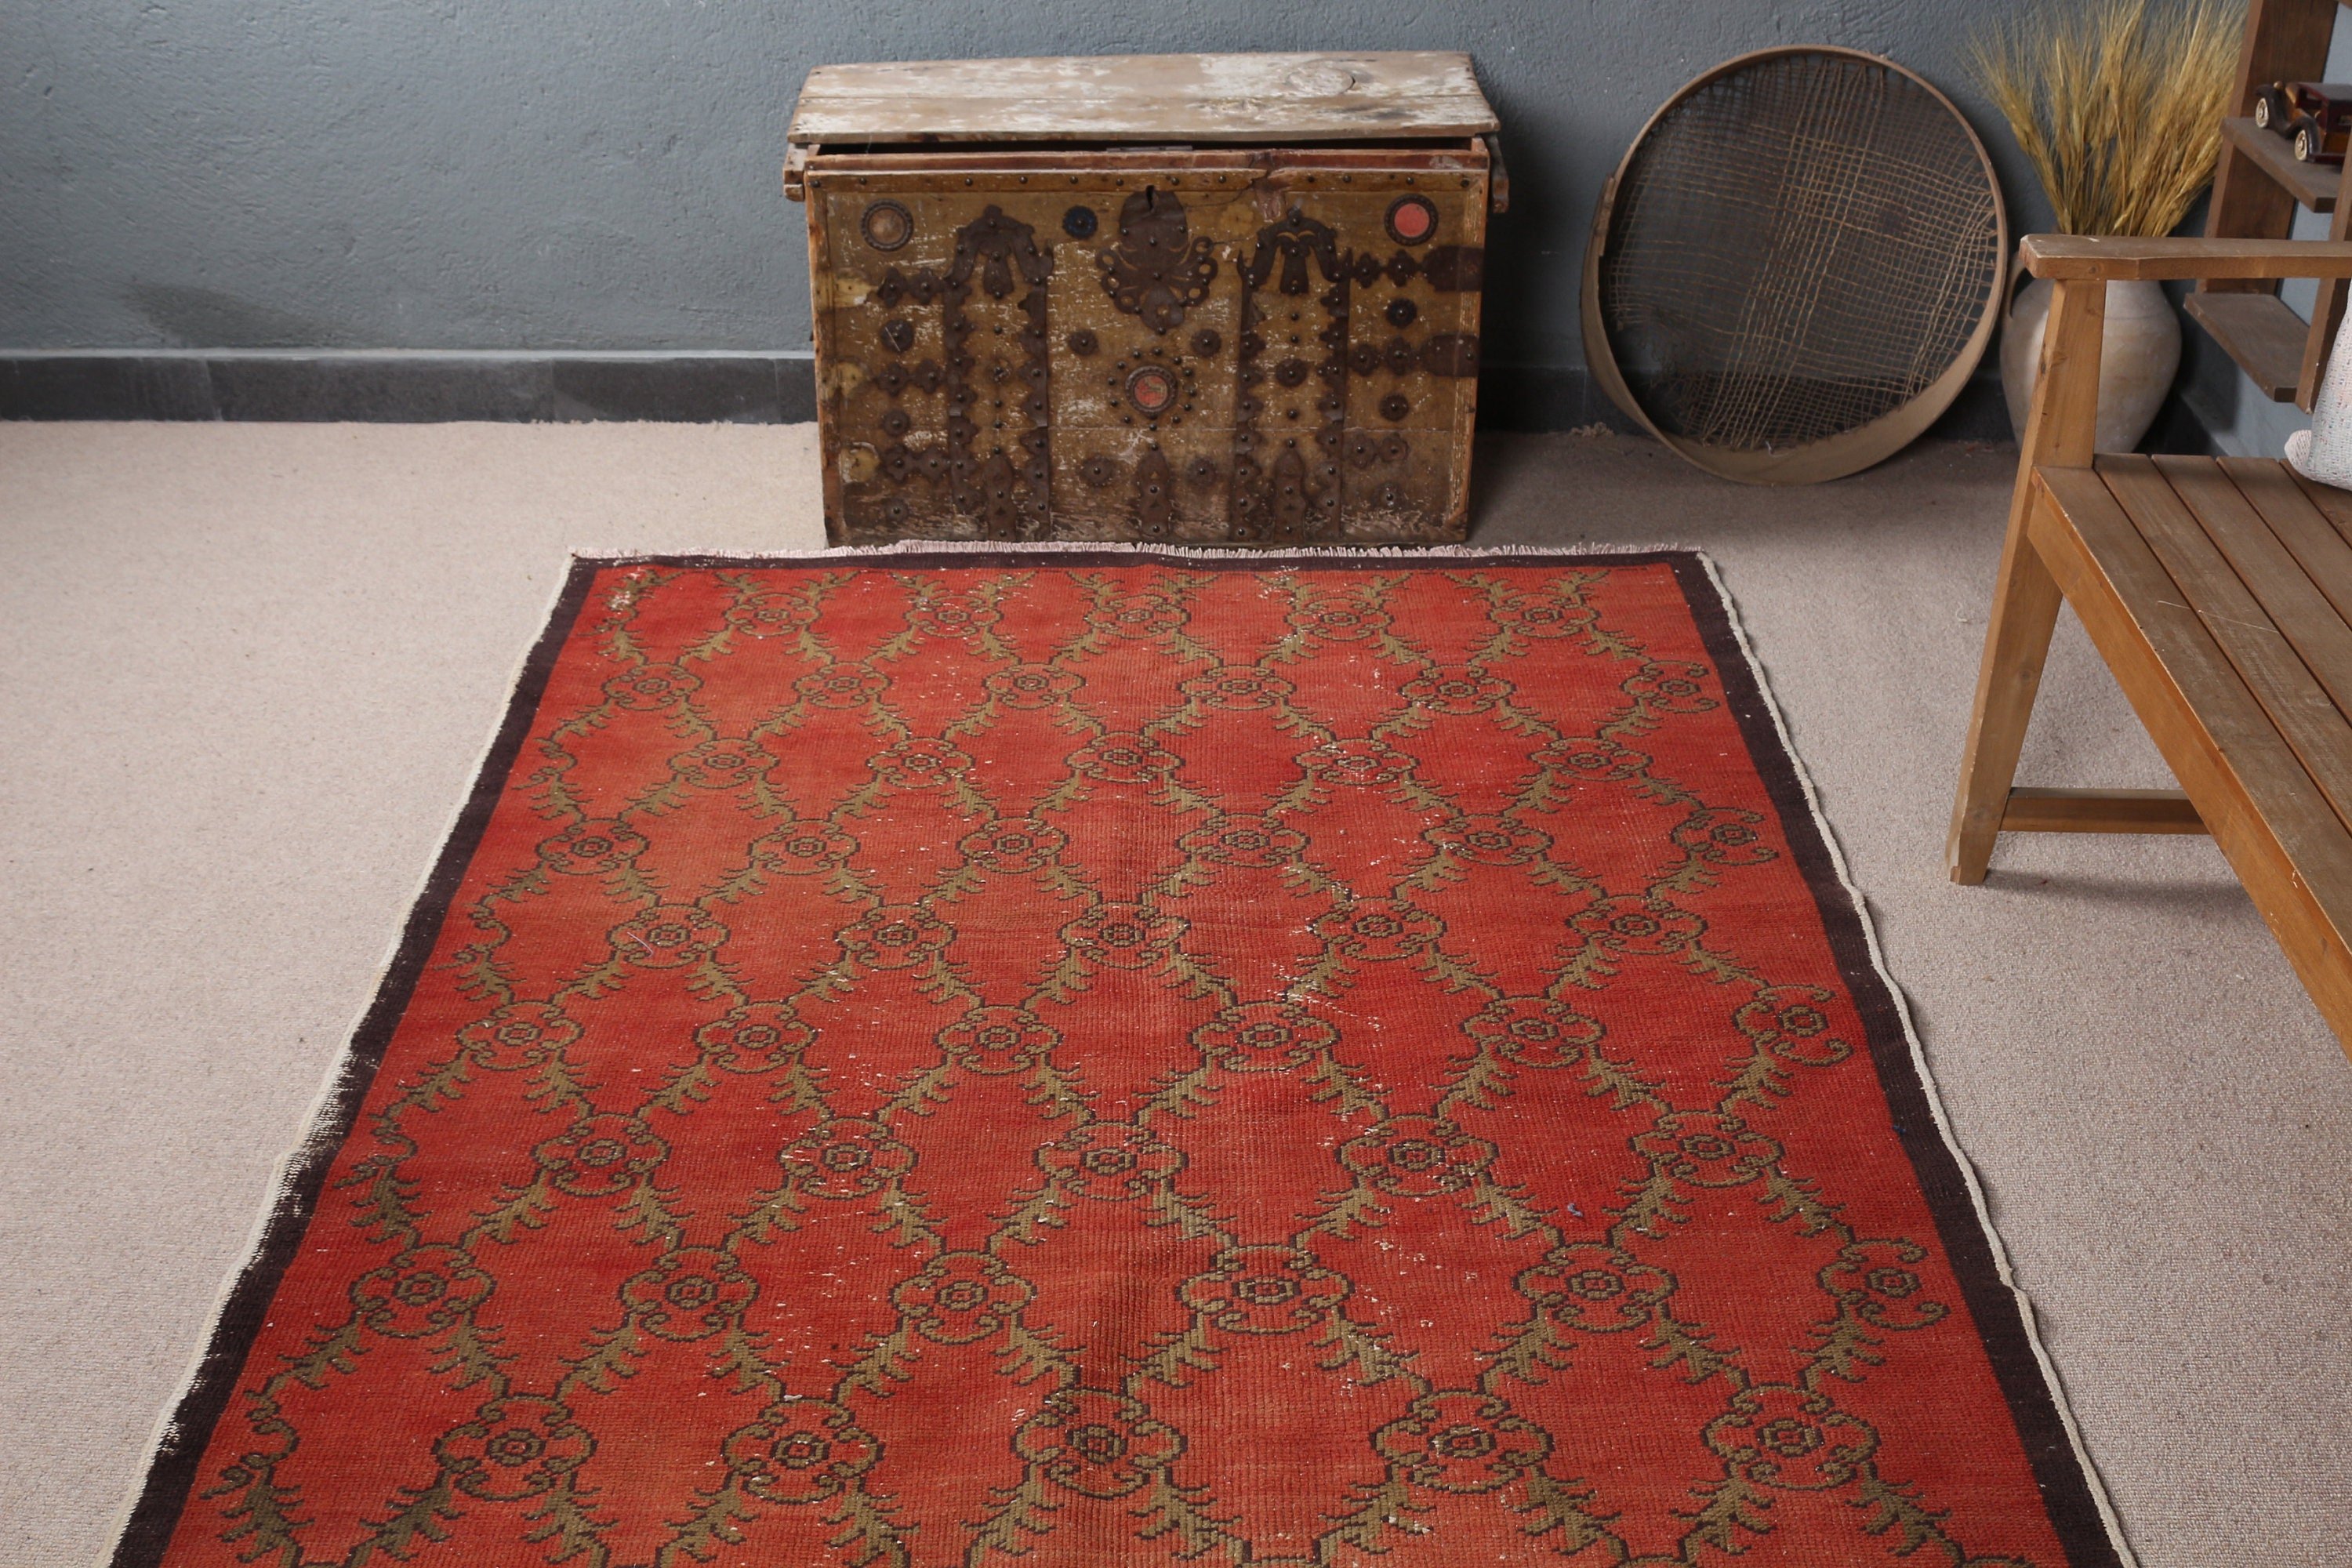 Turkish Rugs, Rugs for Living Room, Vintage Rug, Eclectic Rug, Red Kitchen Rug, Indoor Rug, Bedroom Rug, 4.6x8 ft Area Rug, Antique Rugs